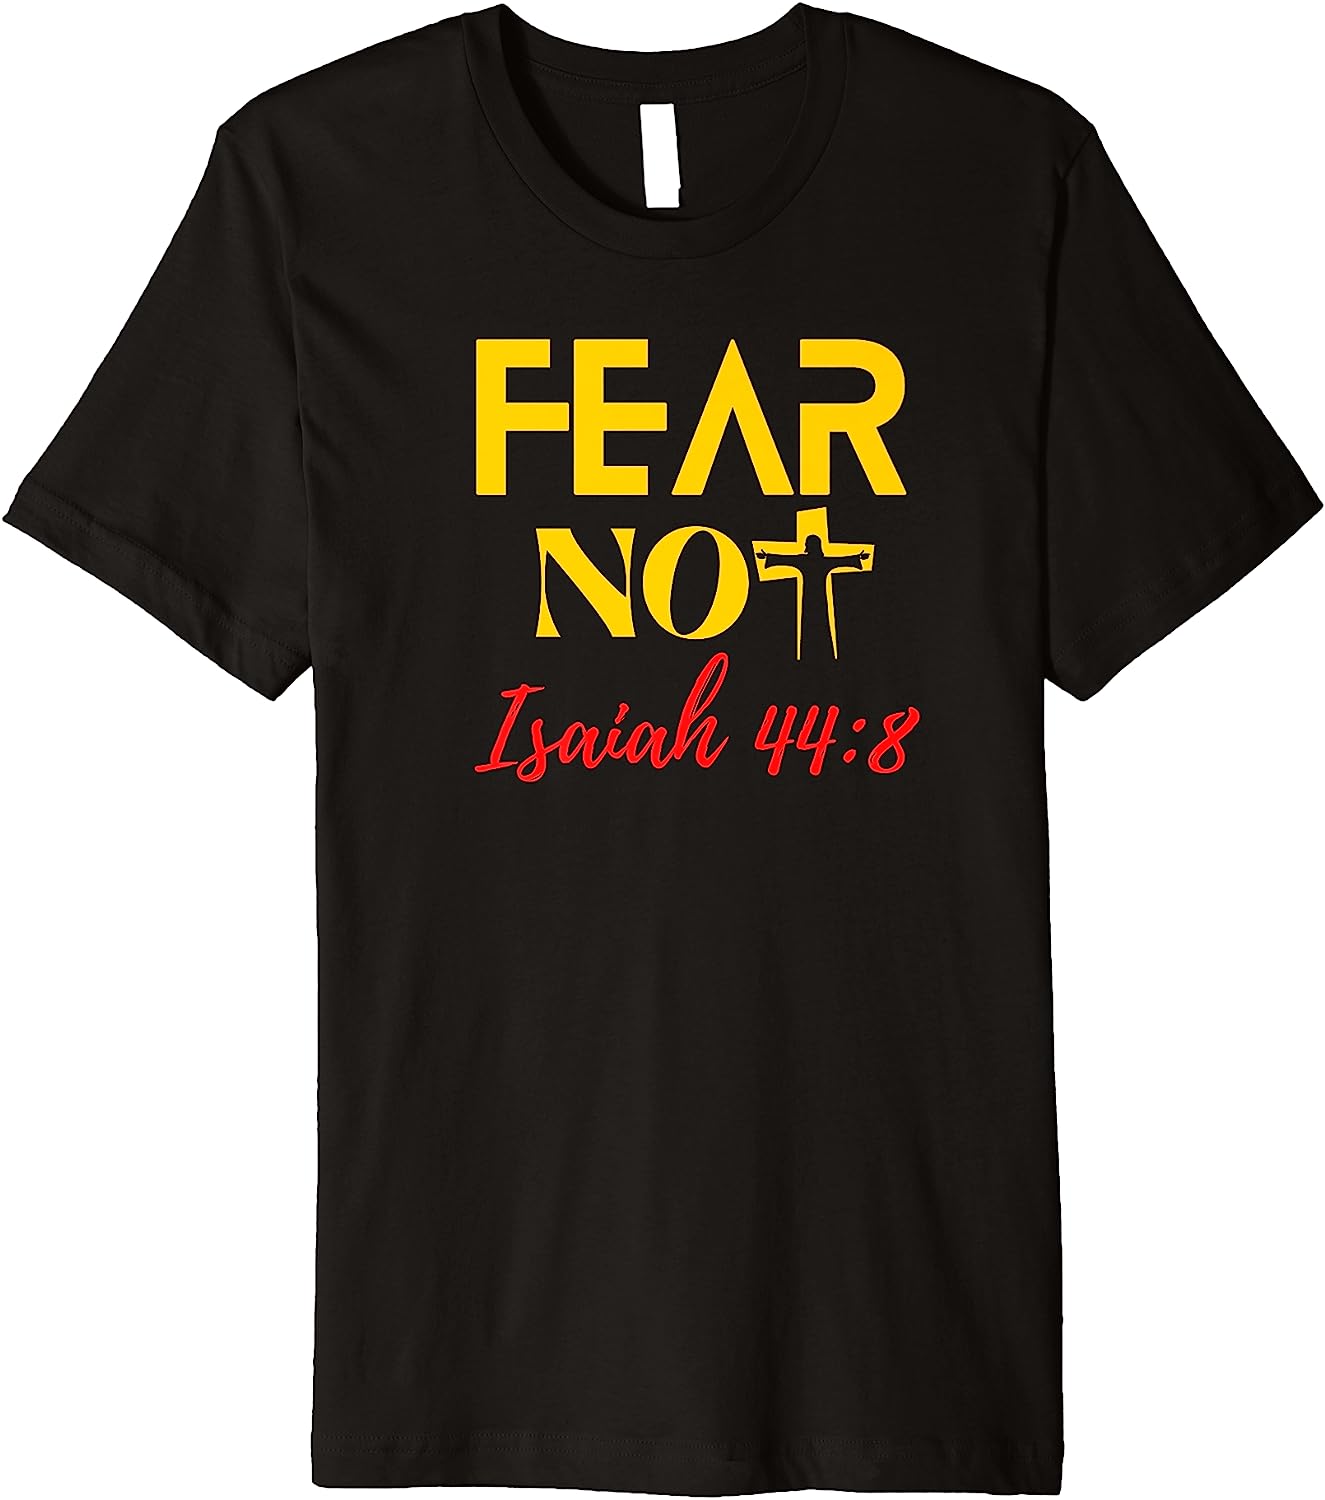 Fear Not - Premium T-Shirt - Fun, Inspirational Design by Crucial Key